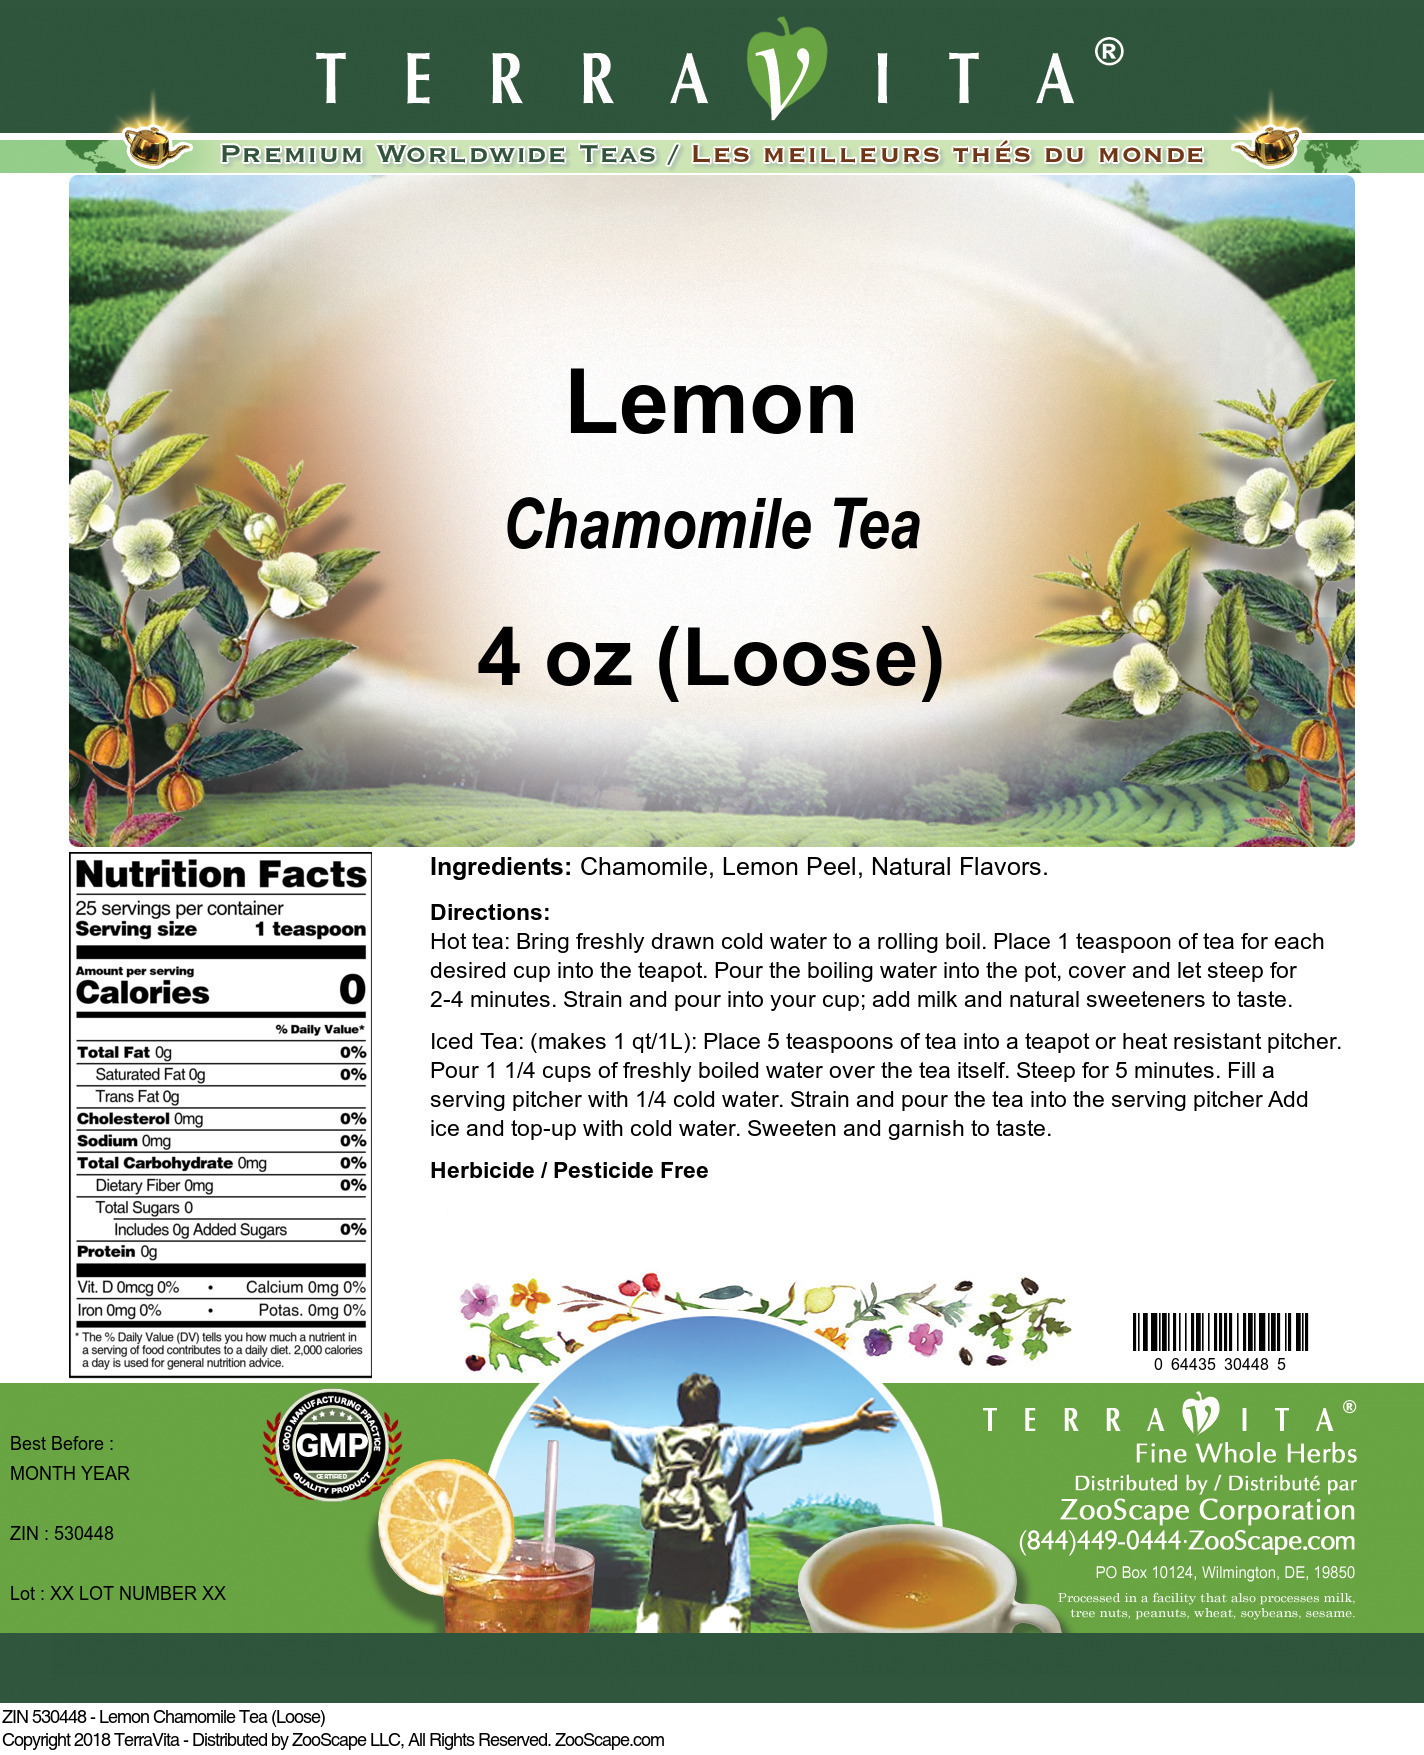 Lemon Chamomile Tea (Loose) - Label